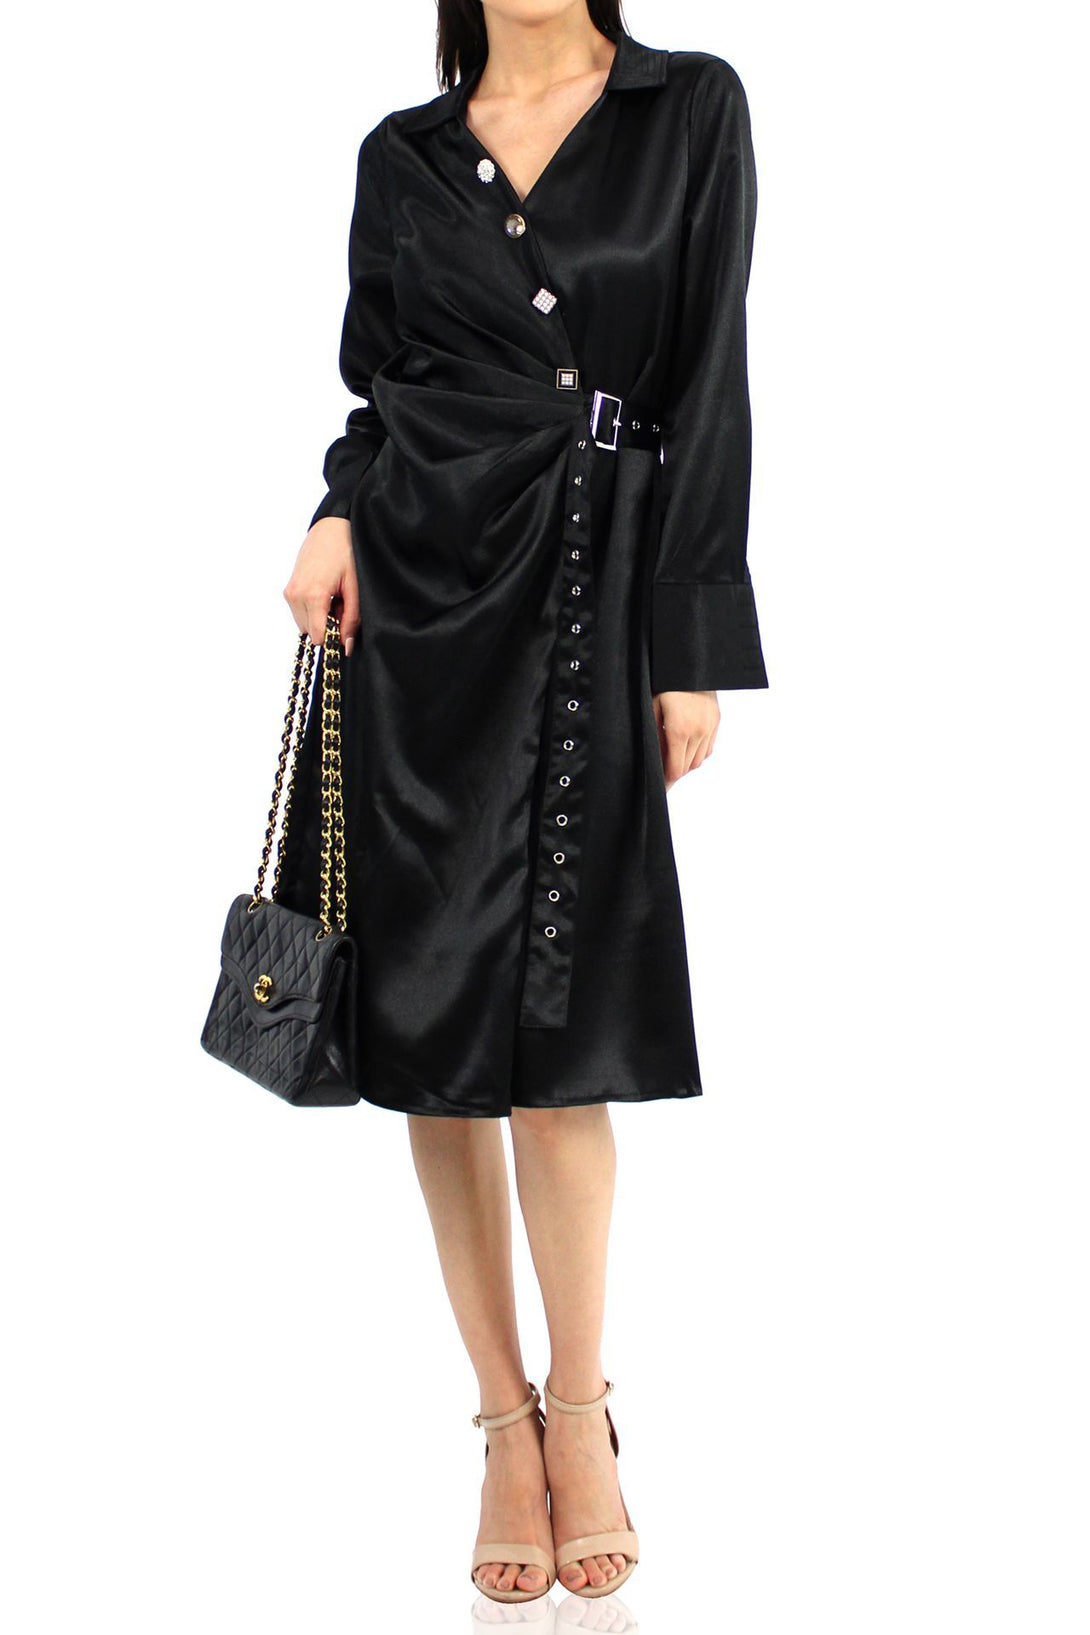 Women-Designer-Mini-Dress-In-Solid-Black-By-Kyle-Richard